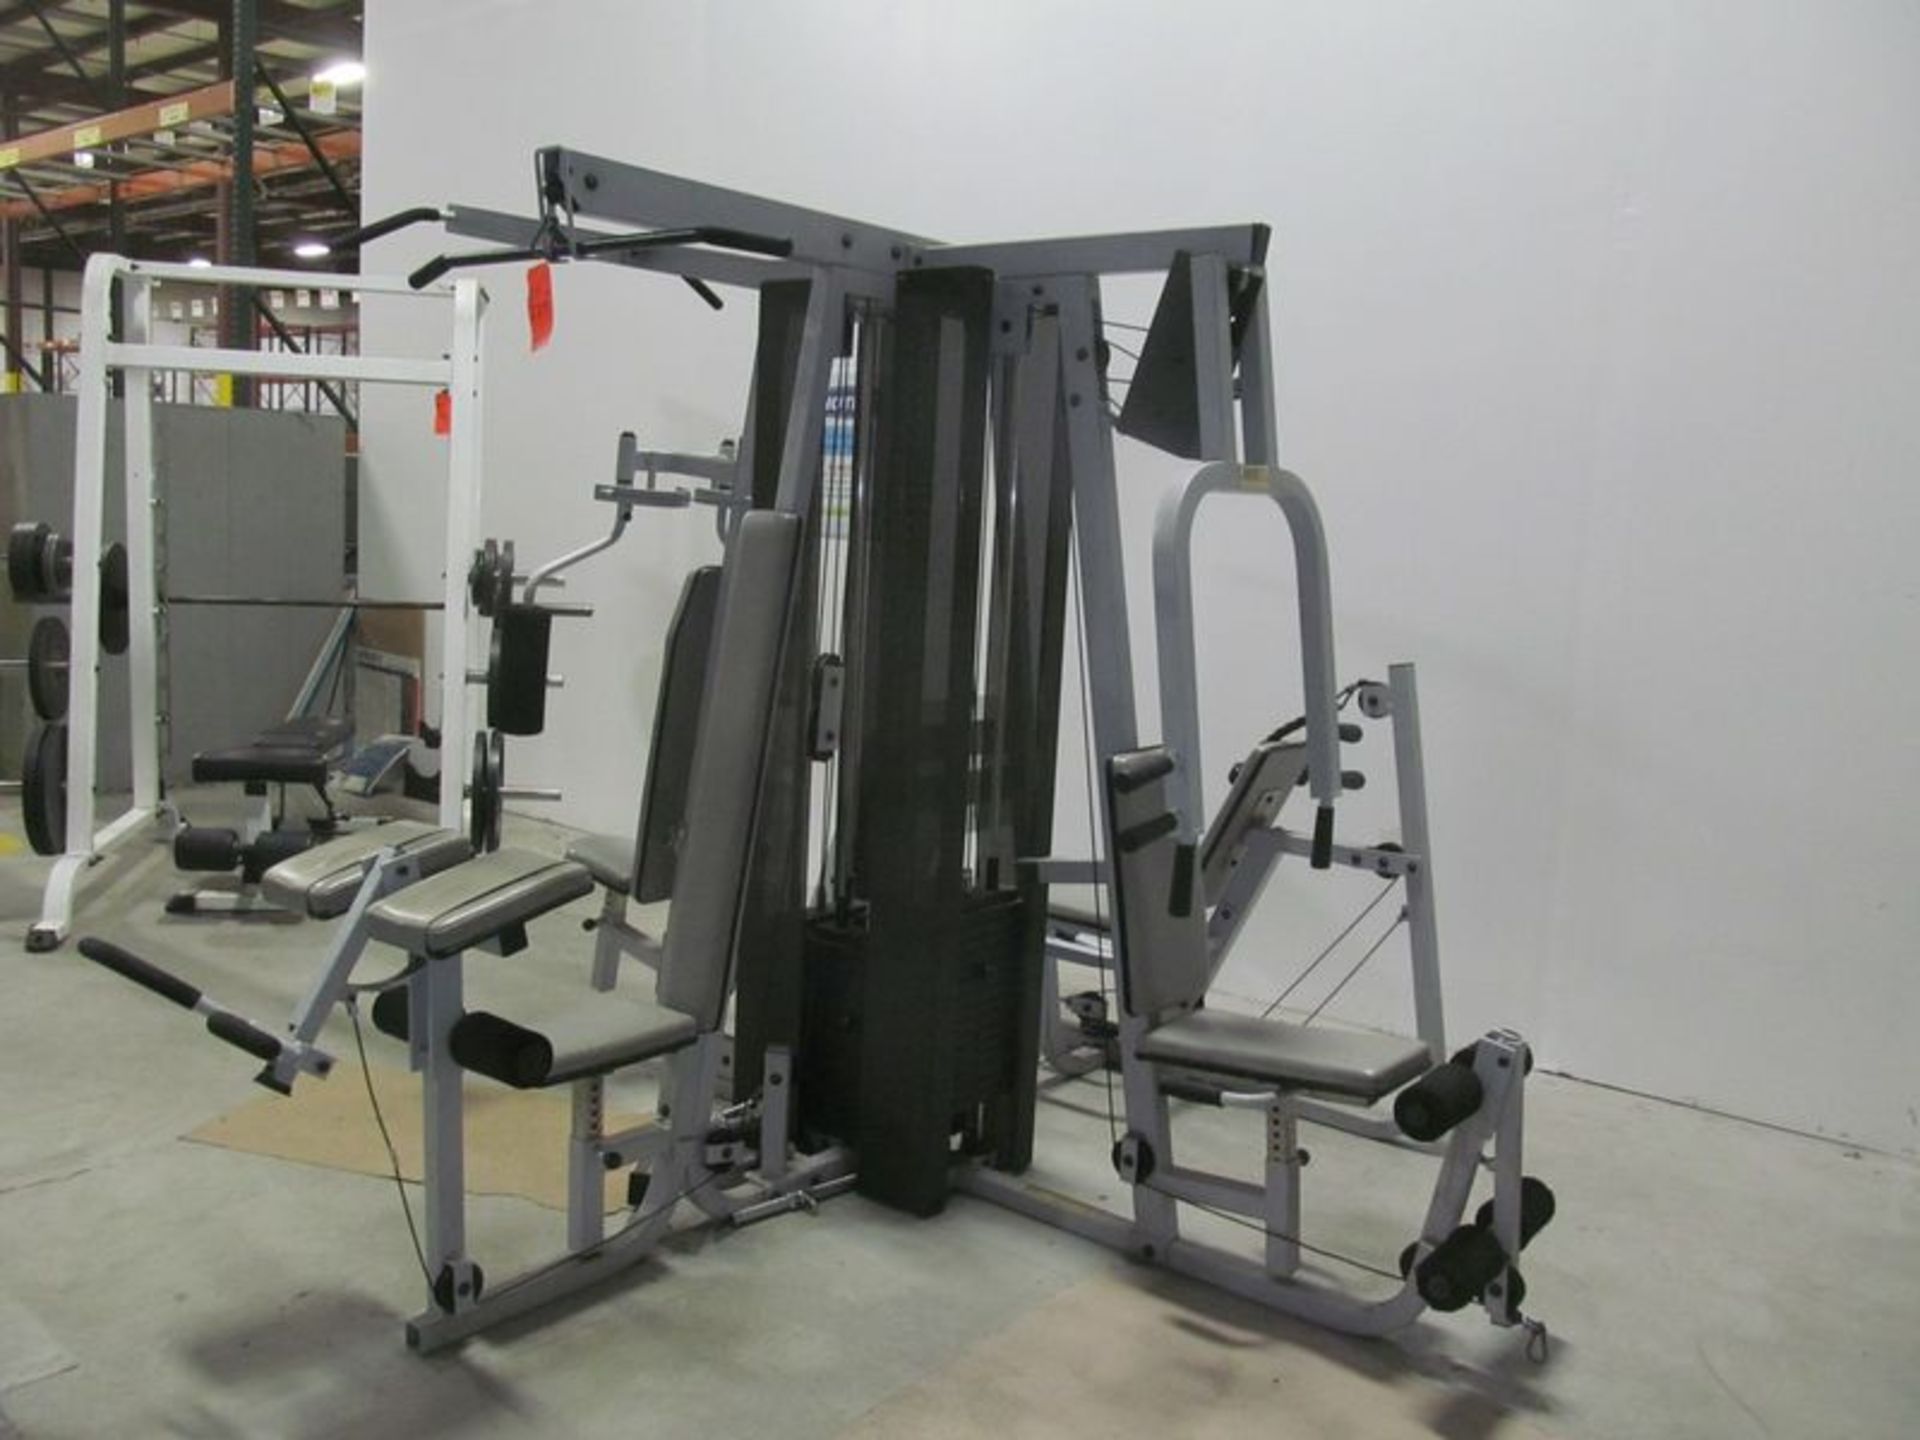 Hoist Fitness System #0-2706, 4-station universal gym